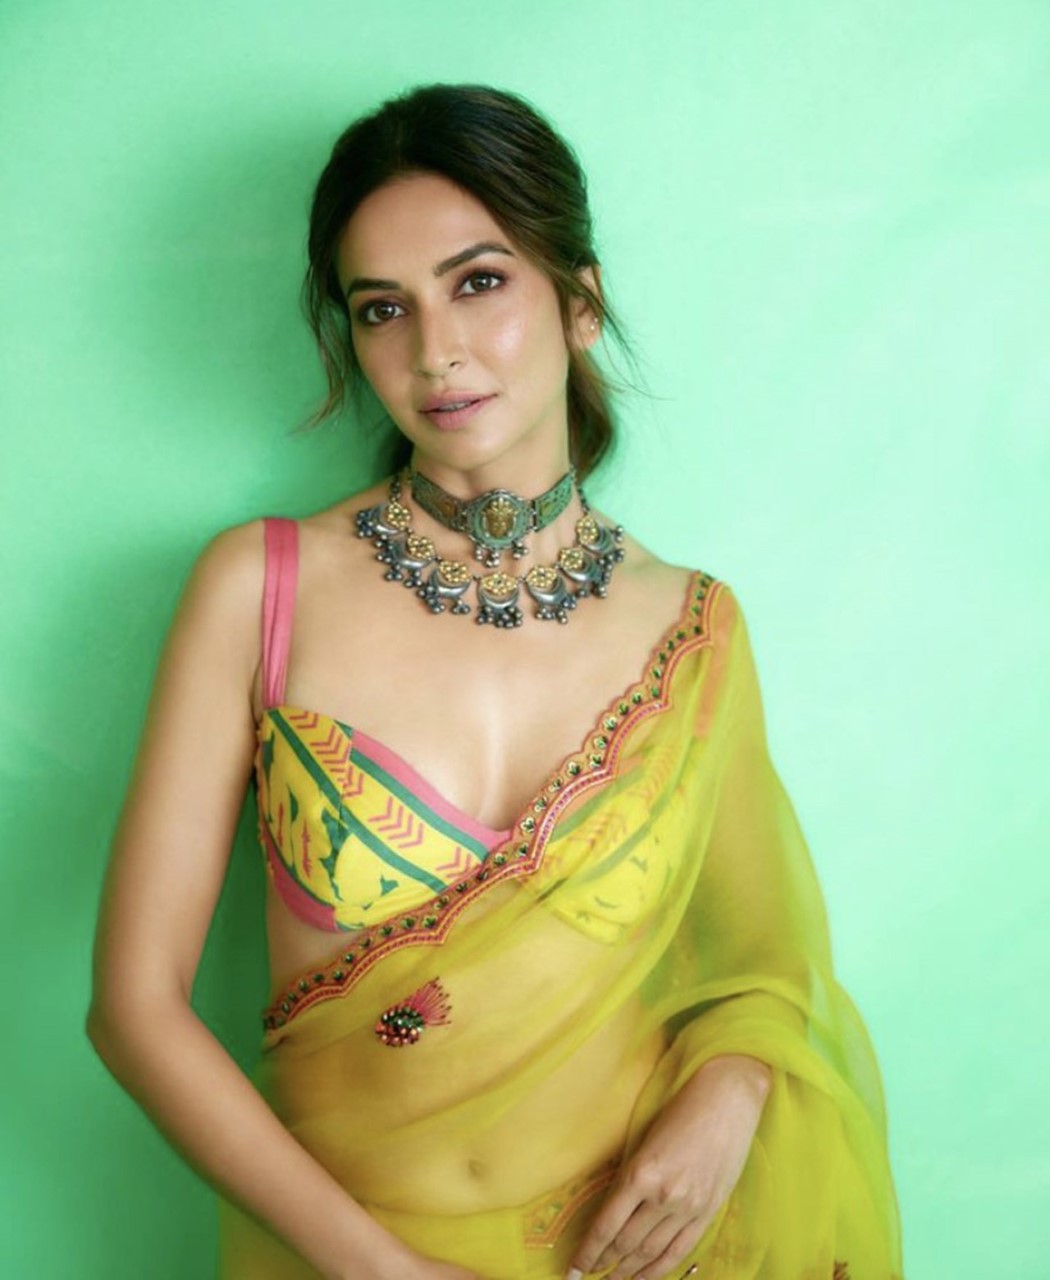 Kriti Kharbanda in a stunning yellow saree is redefining summer ethnic fashion